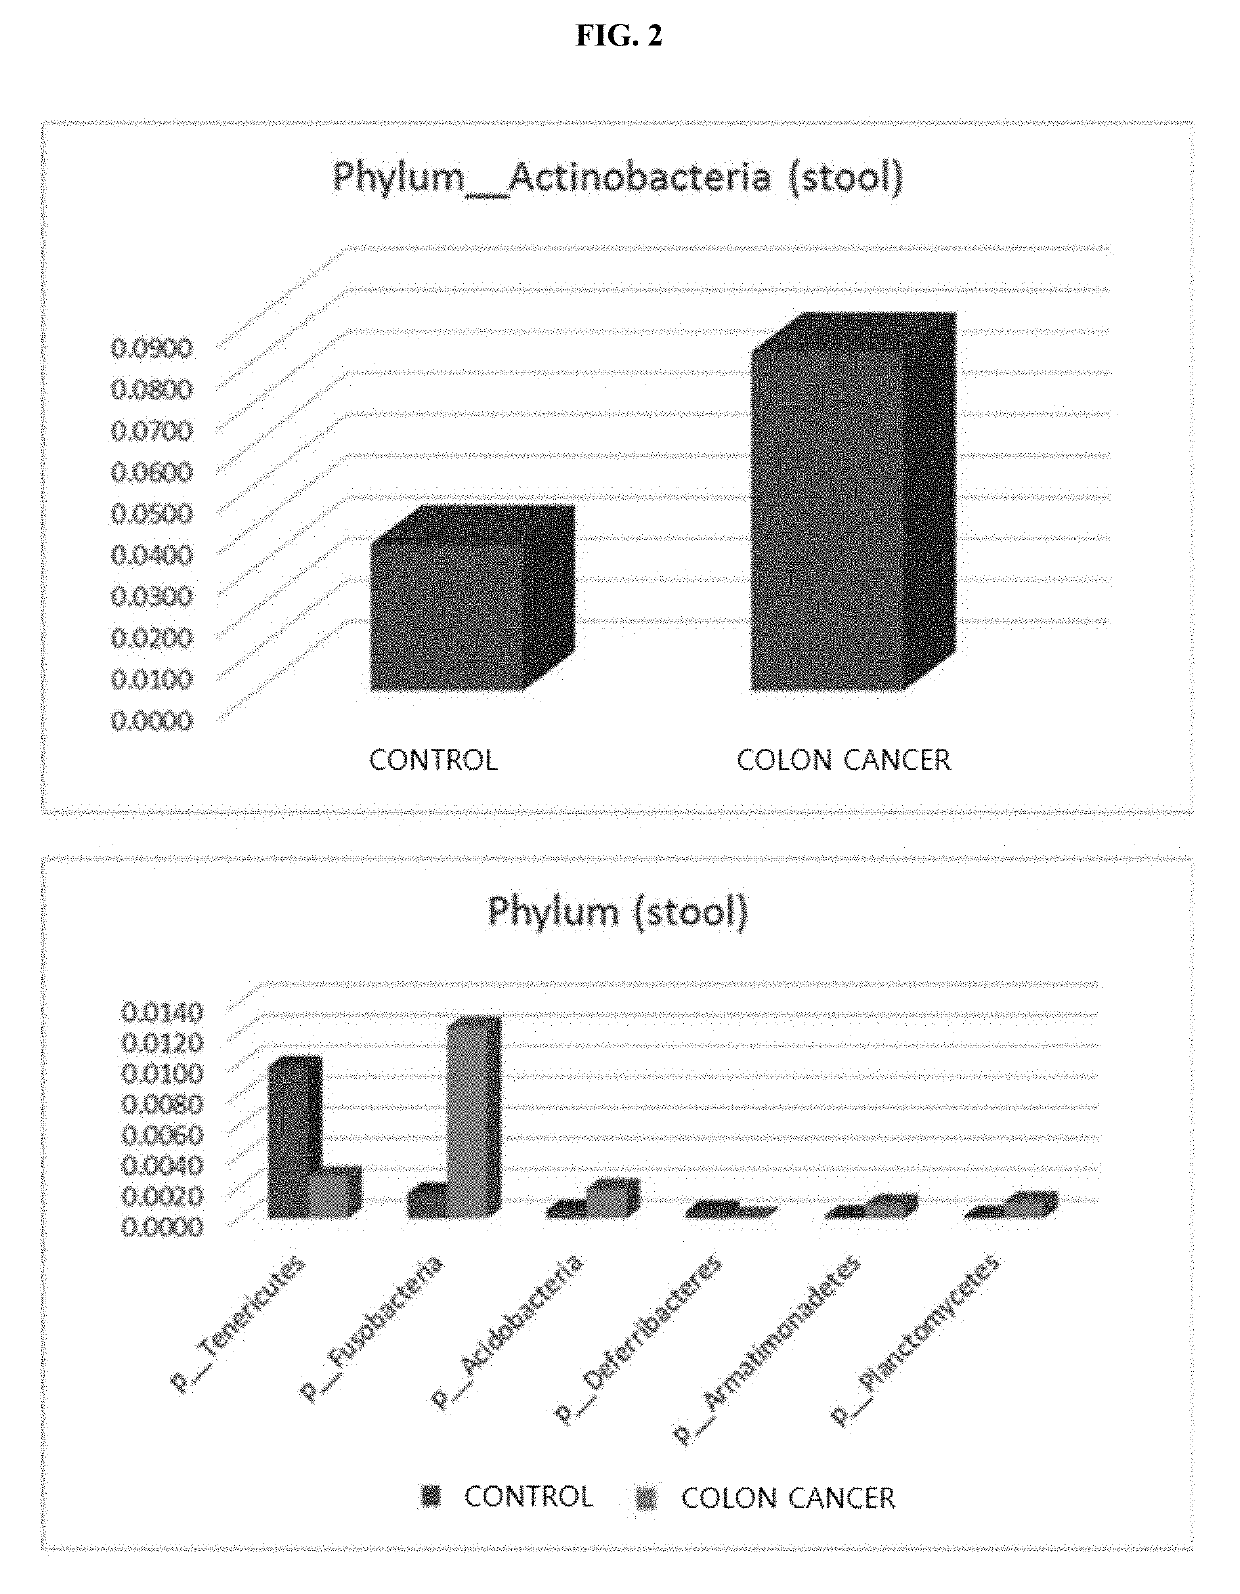 Method for diagnosing colon tumor via bacterial metagenomic analysis